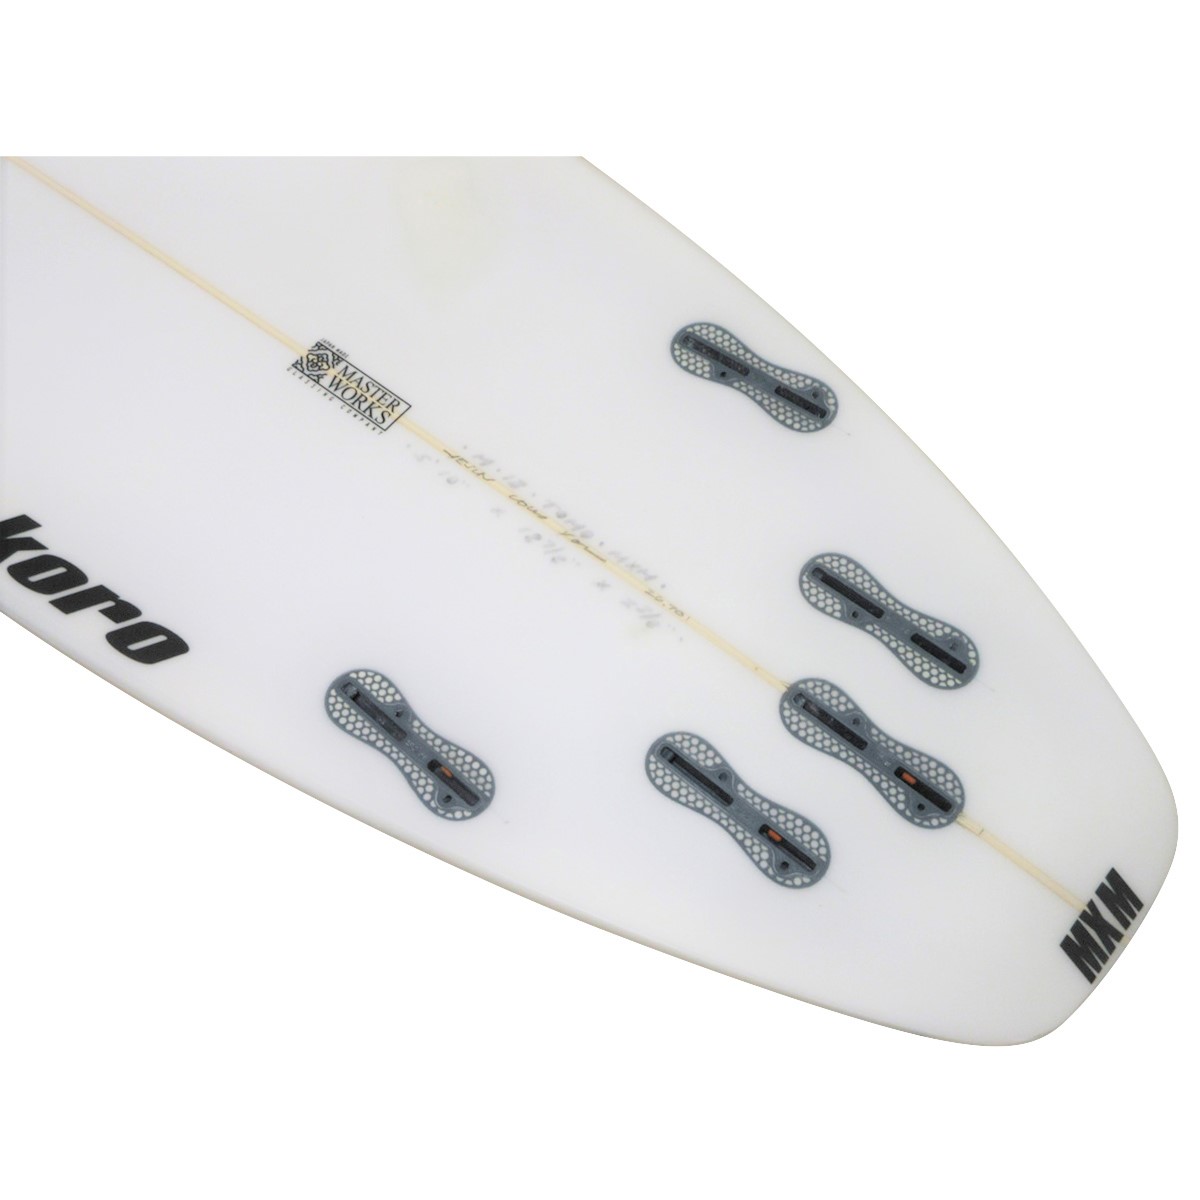 TOKORO SURFBOARDS / 5`10 MXM Japan Made